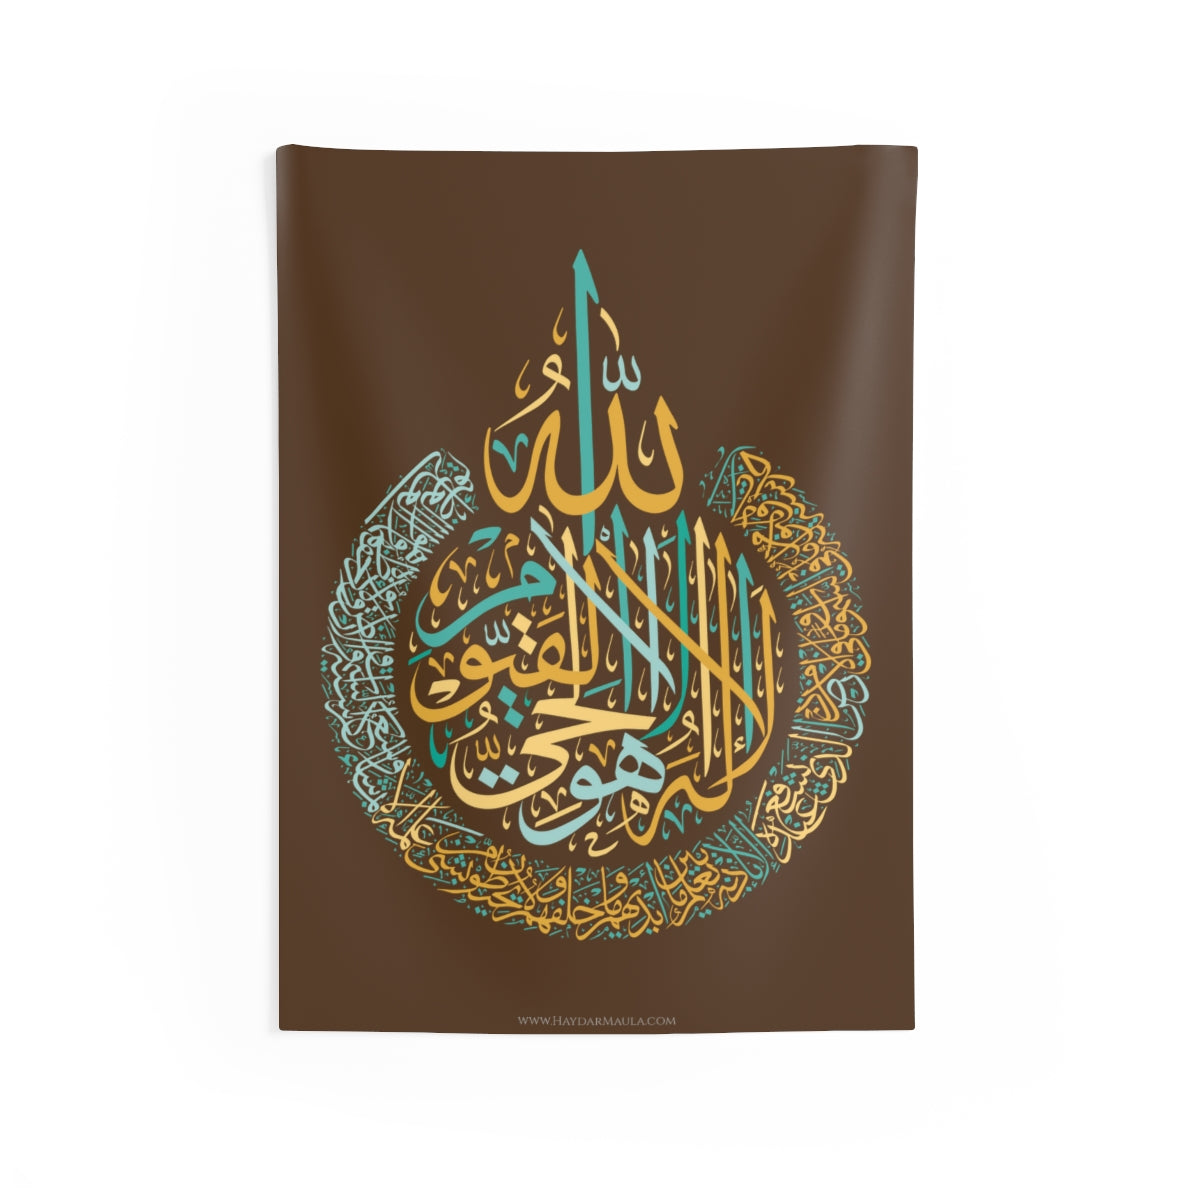 Ayatul Kursi Verse 255 Surah Al Baqarah Arabic Calligraphy - The Verse of The Throne Wall Tapestry Flag, Islamic Decor, Gift Quranic Verse